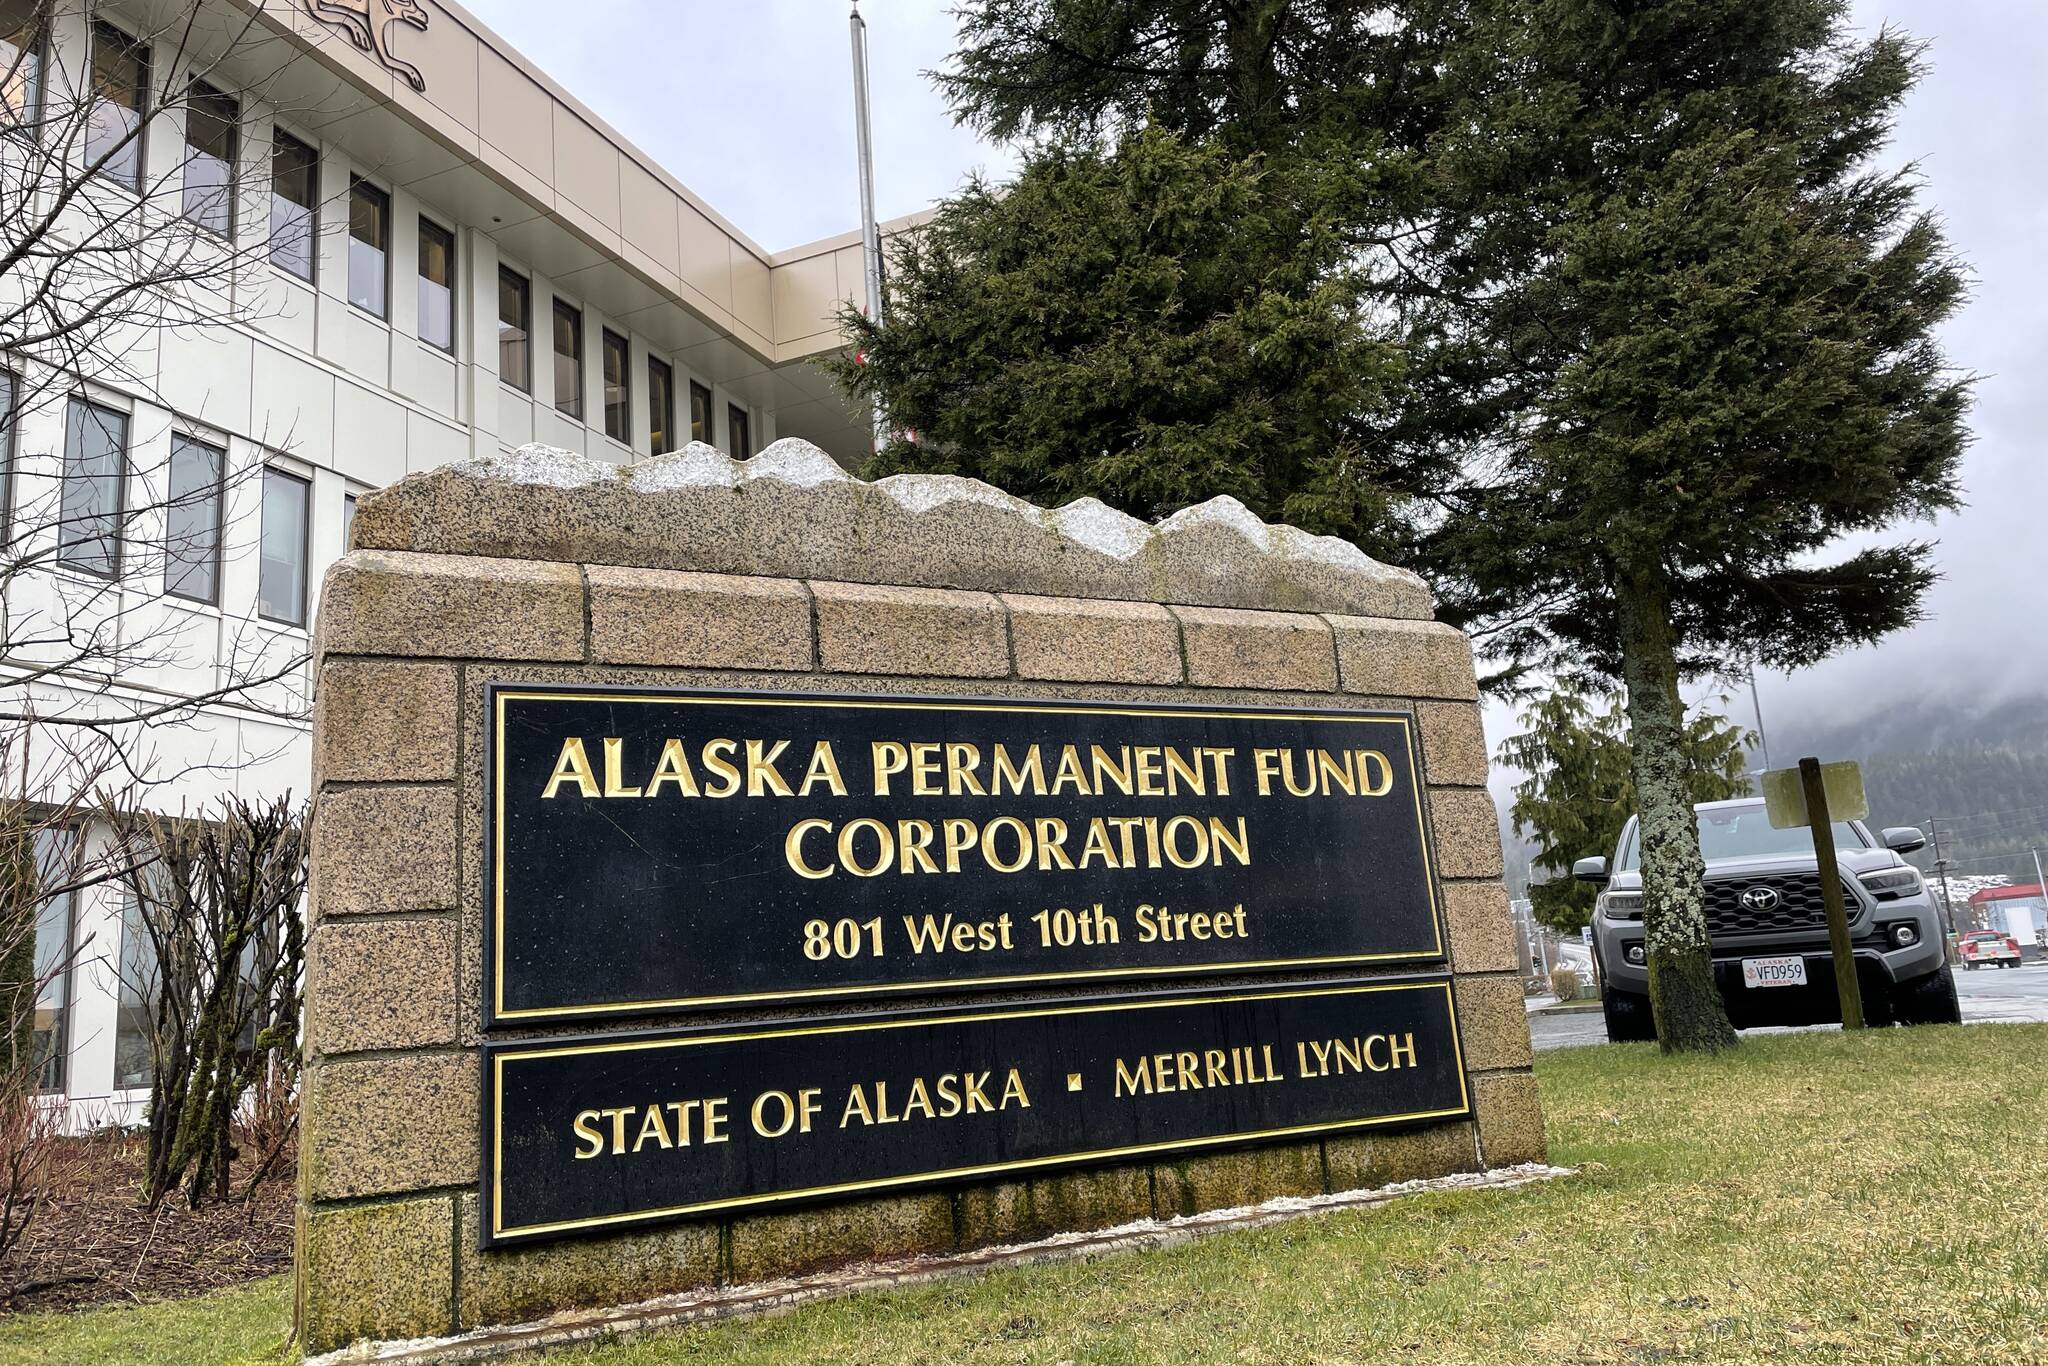 The Alaska Permanent Fund Corporation building is seen in Juneau, Alaska, in March 2022. (Michael S. Lockett / Juneau Empire)